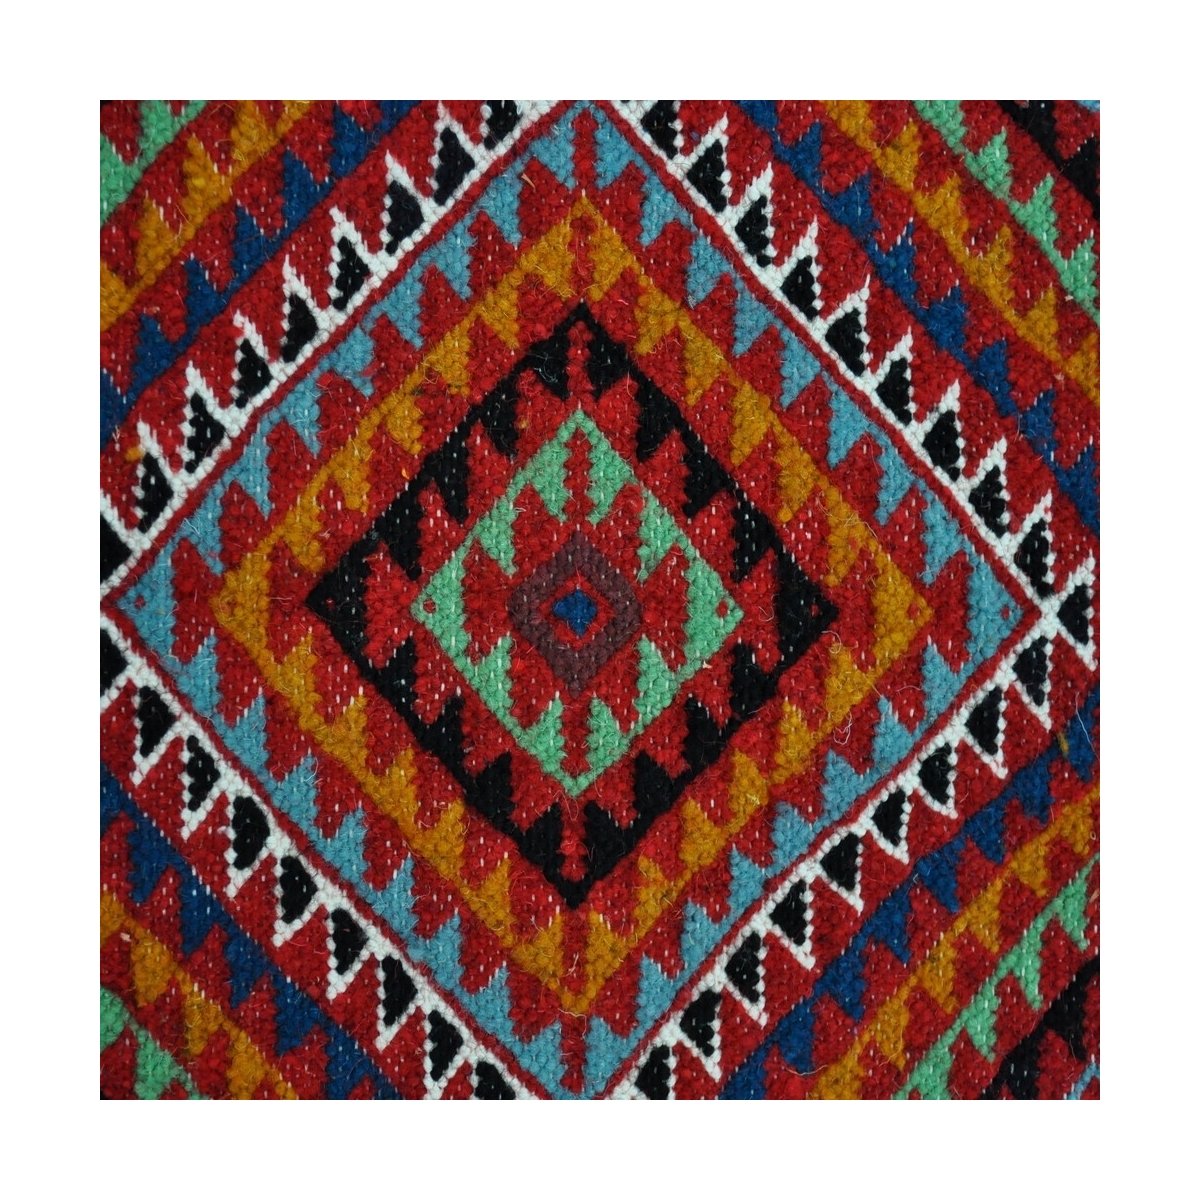 Berber tapijt Tapijt Kilim Kef 60x110 Veelkleurig (Handgeweven, Wol, Tunesië) Tunesisch kilimdeken, Marokkaanse stijl. Rechthoek